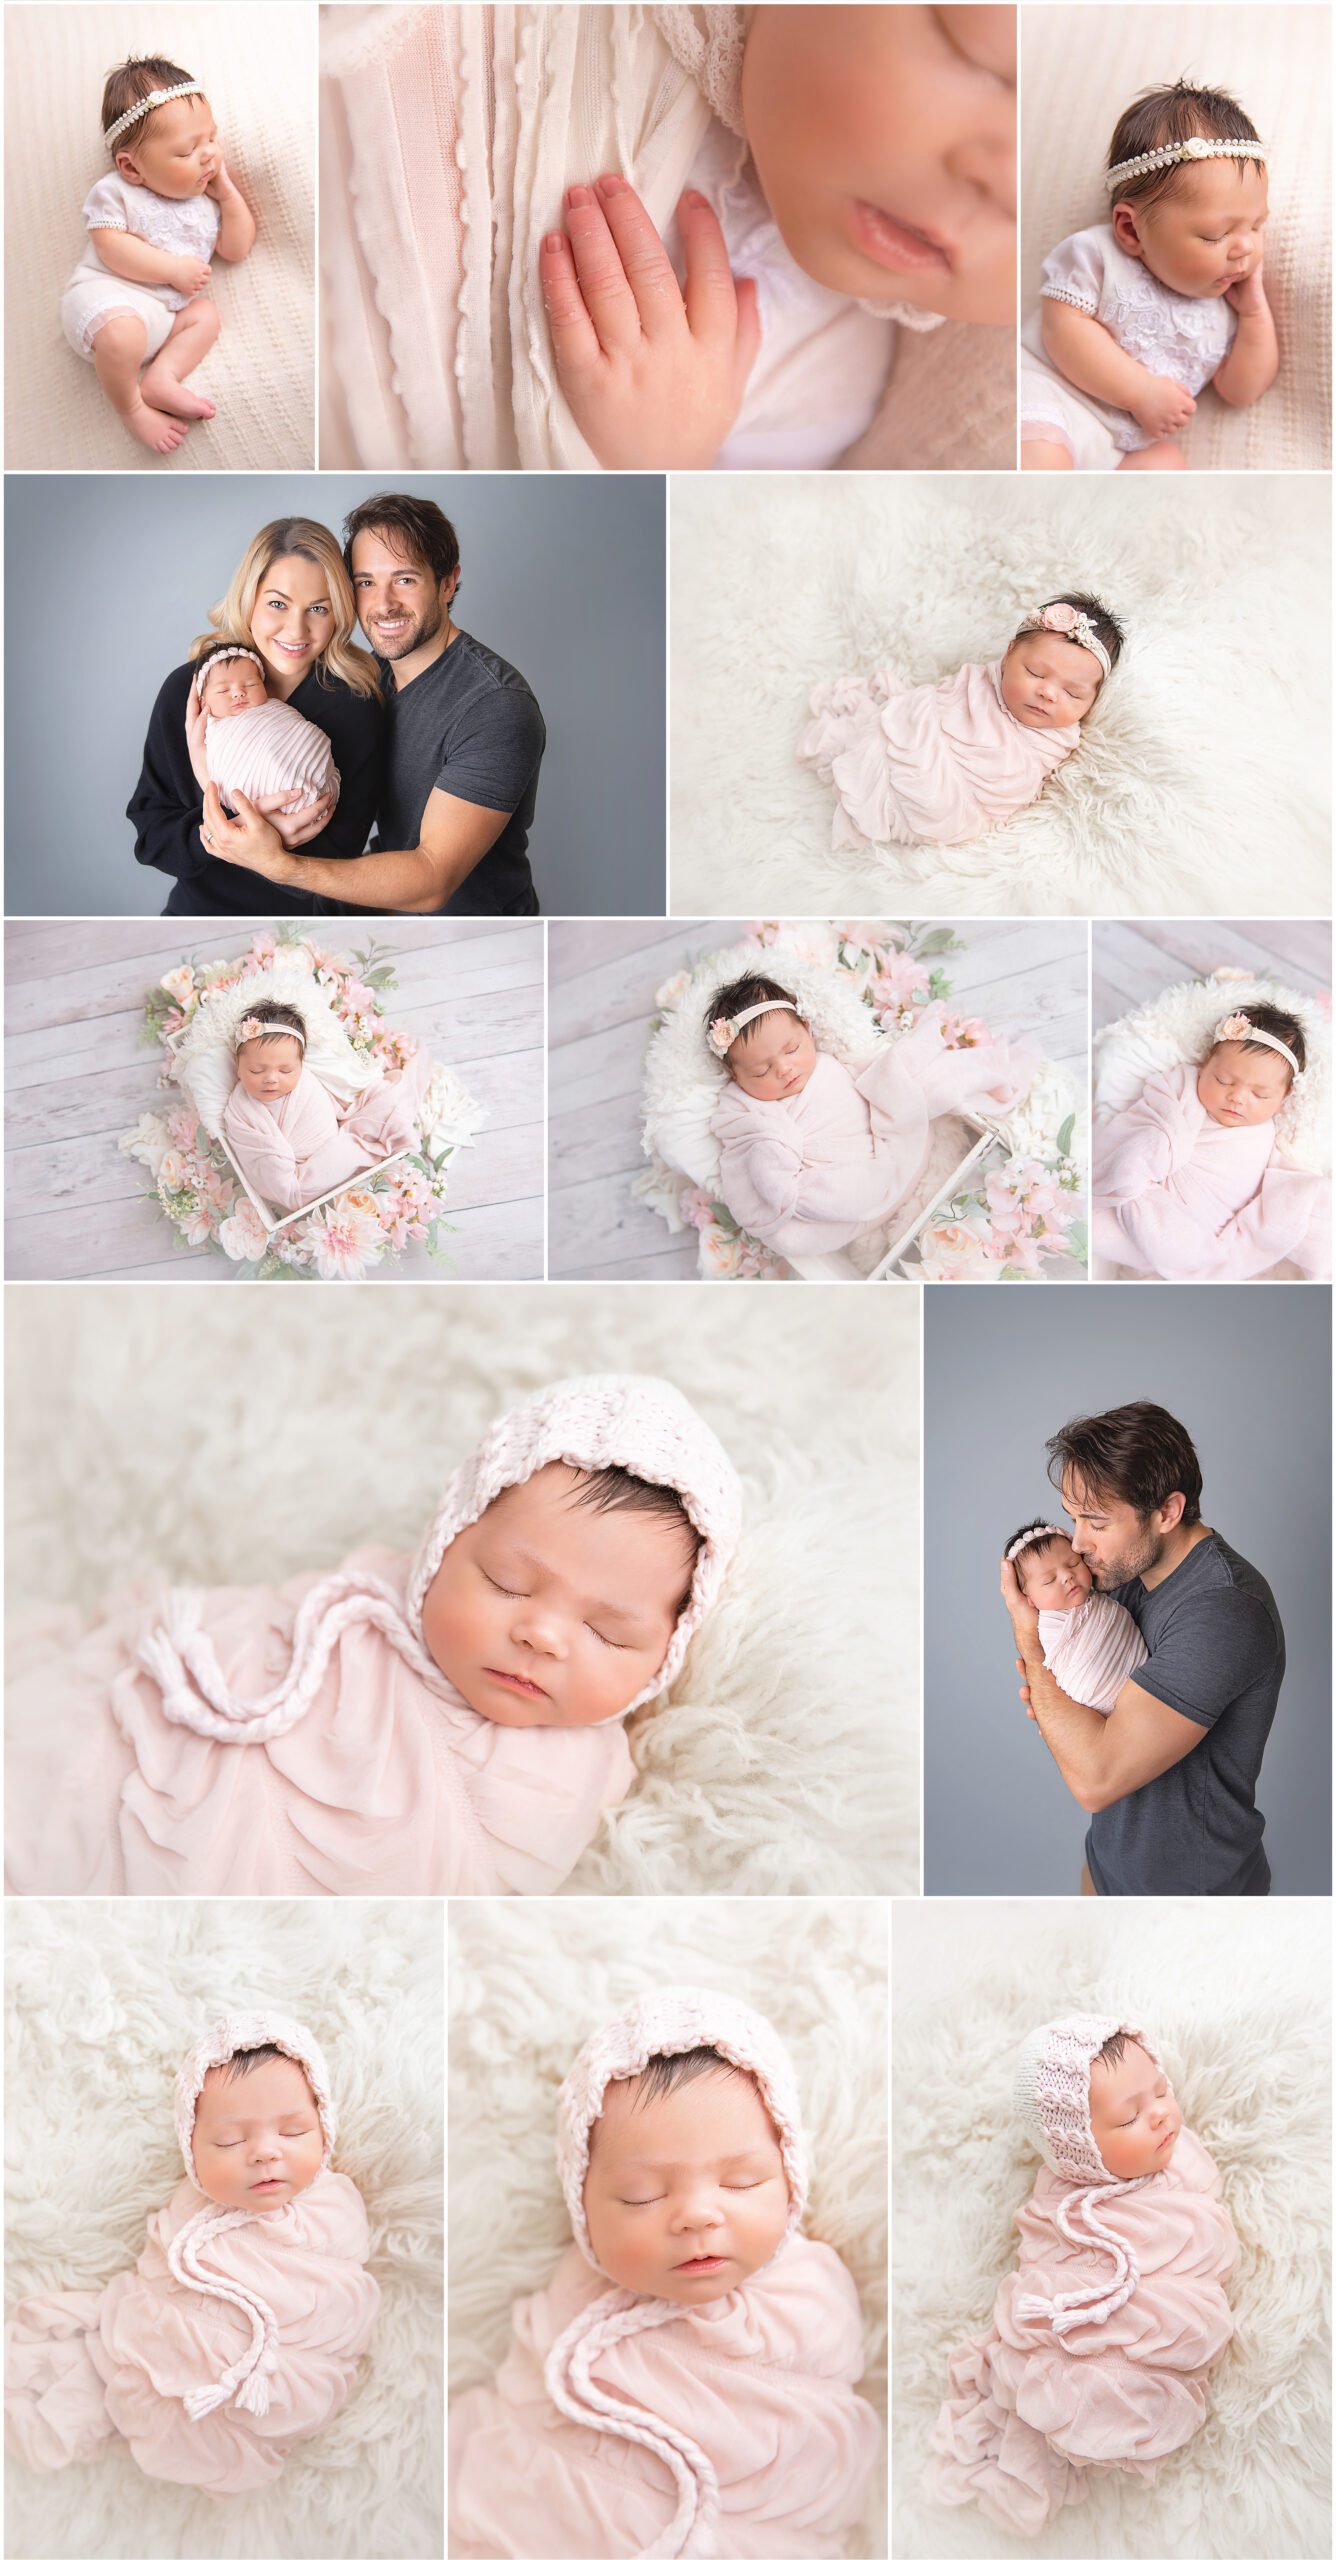 Austin's #1 Newborn Photographer